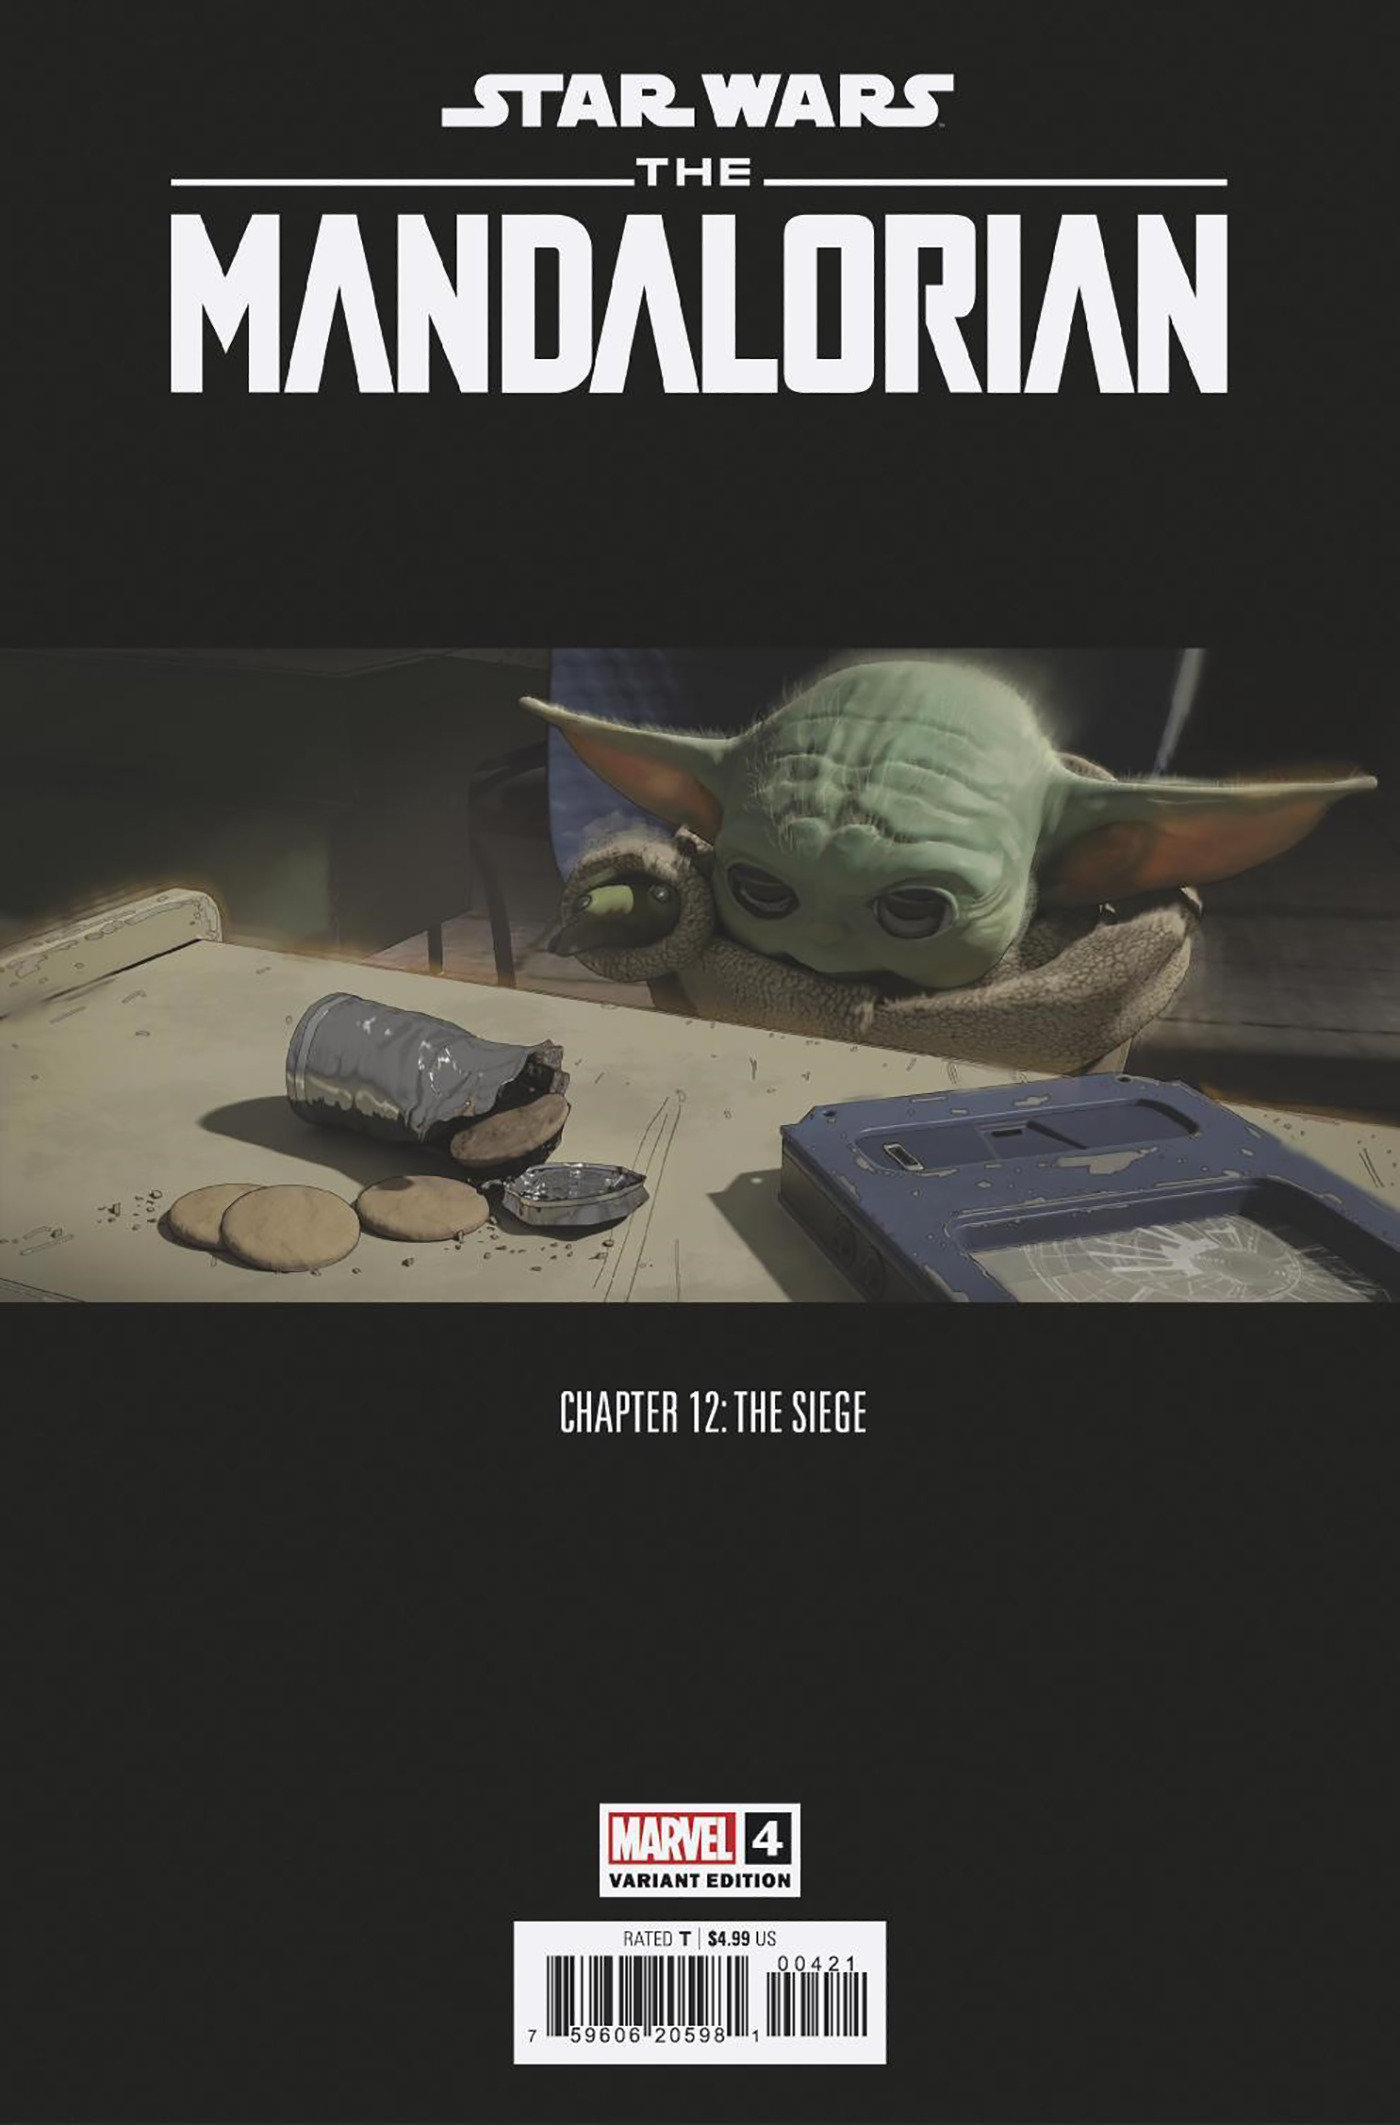 Star Wars: The Mandalorian Season 2 #4 Concept Art Variant